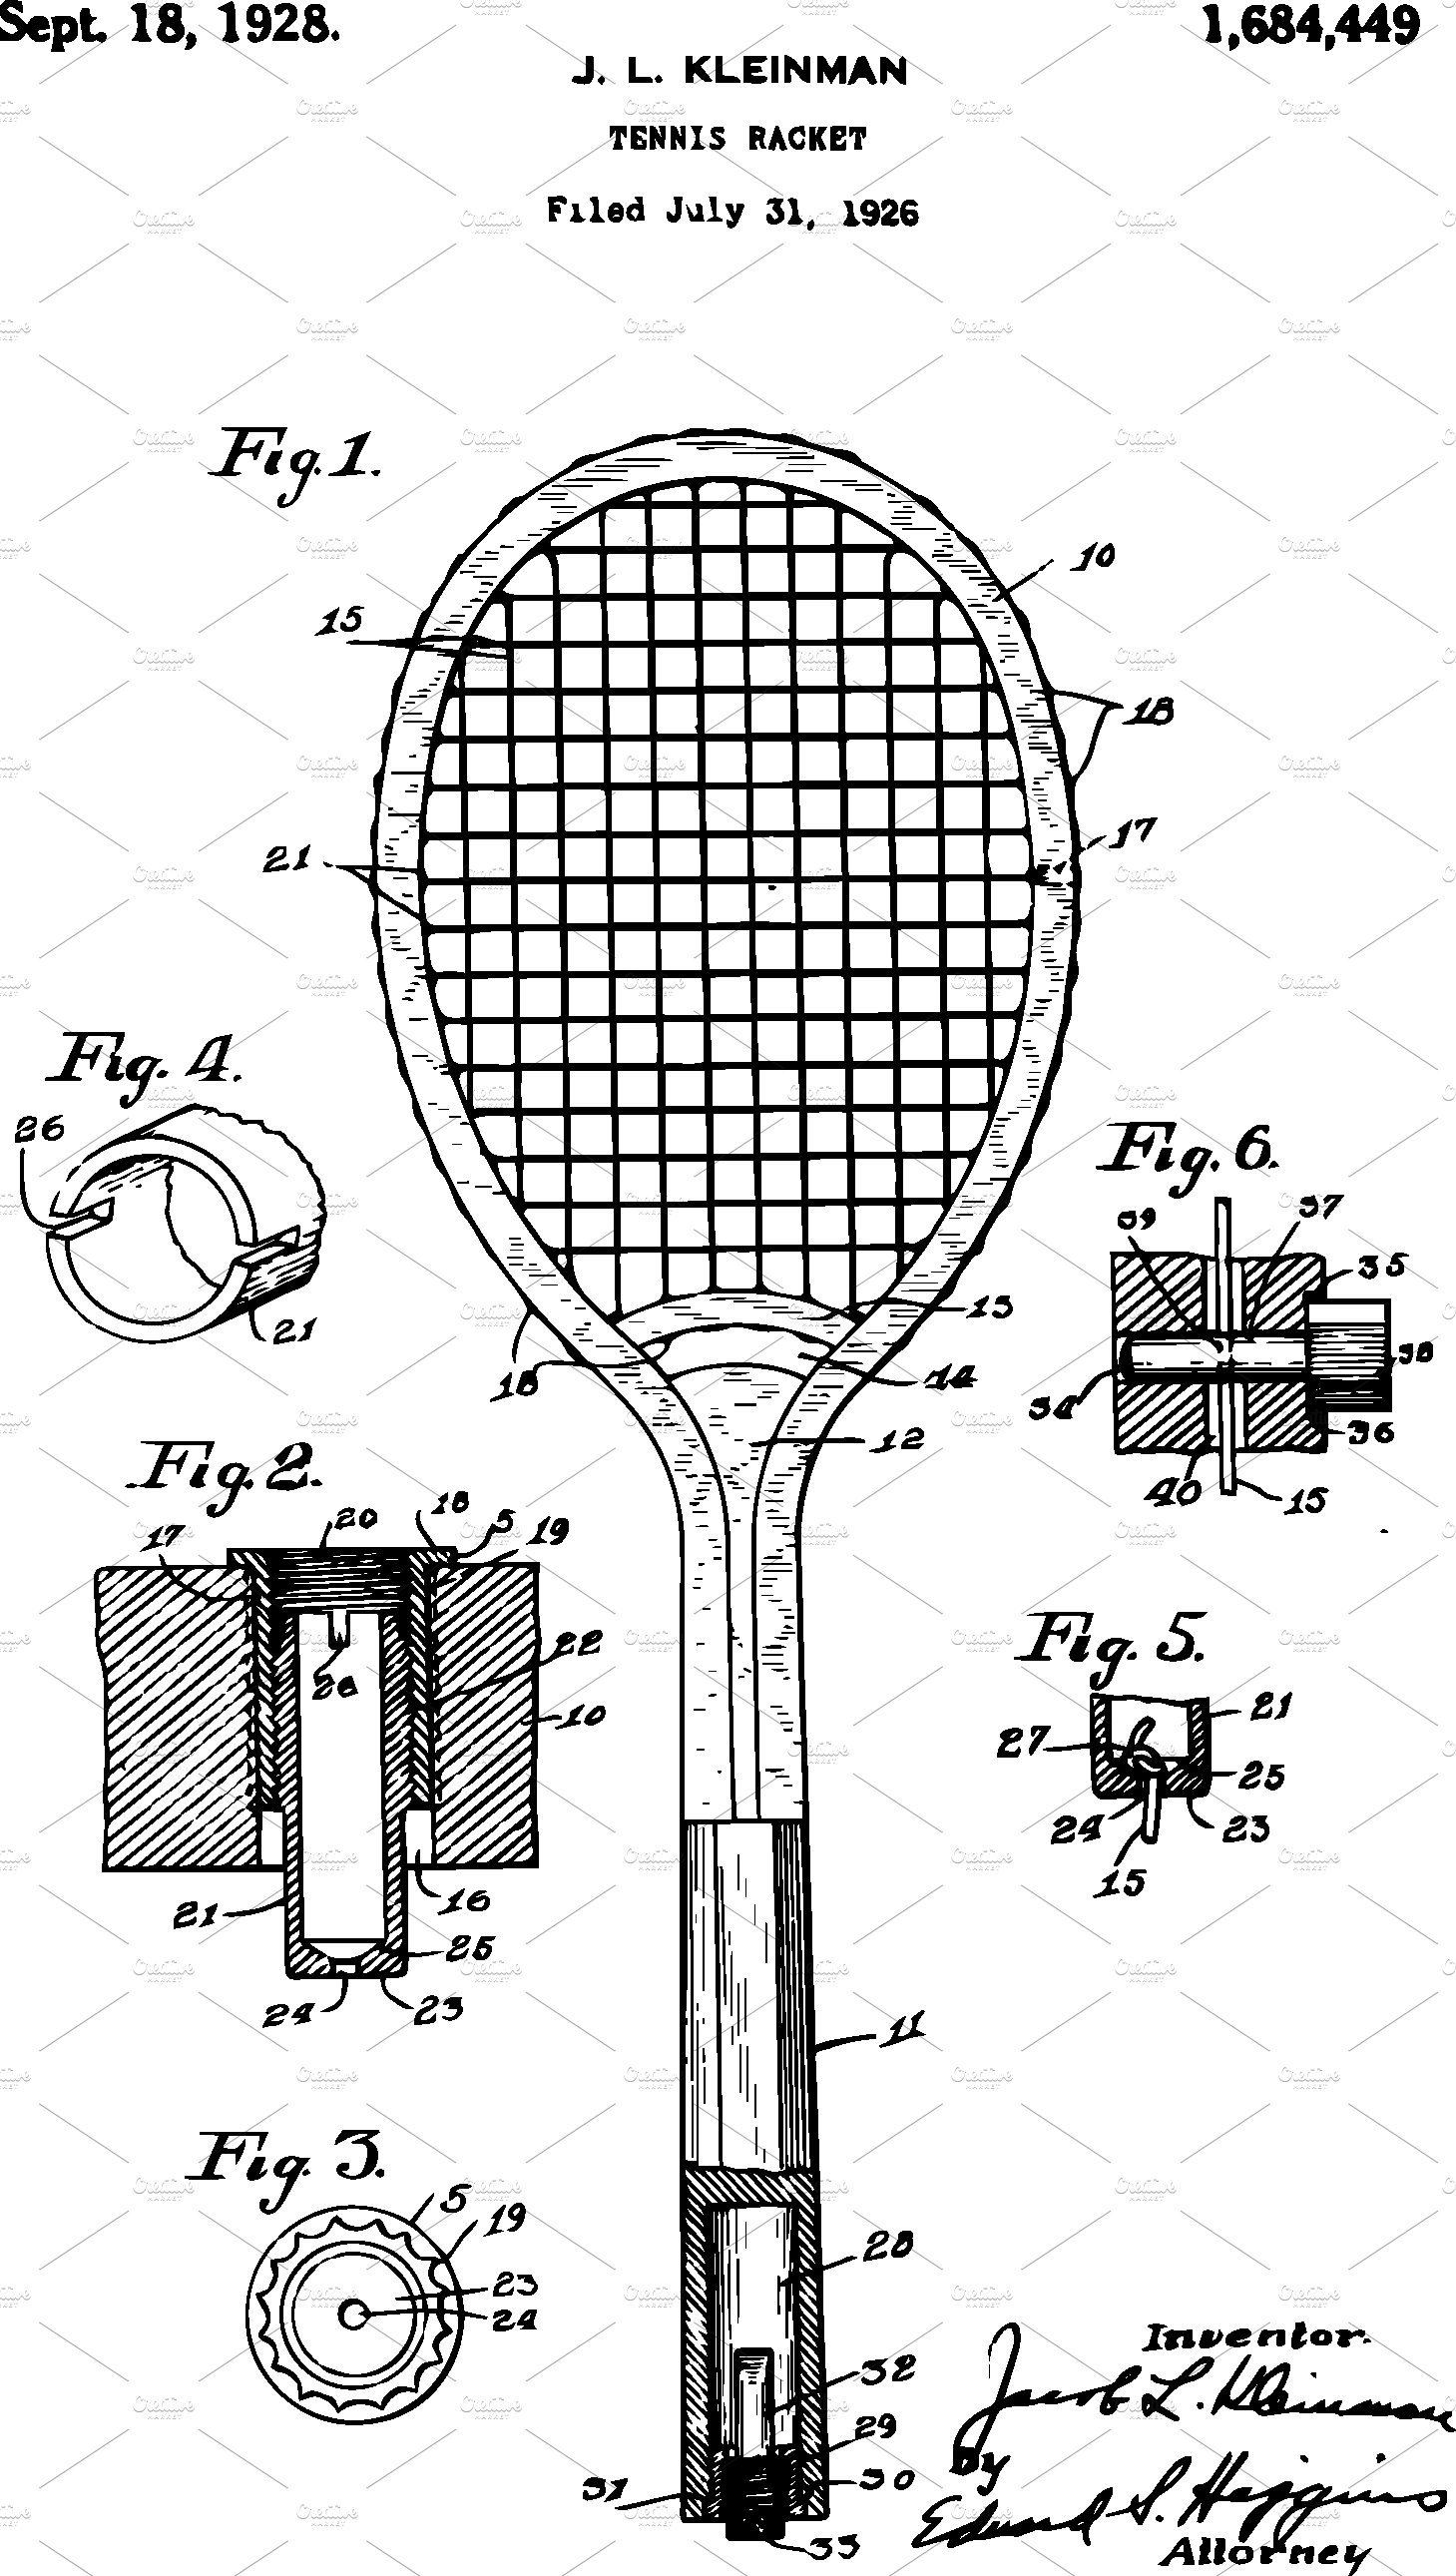 Explanation of tennis racket parts.